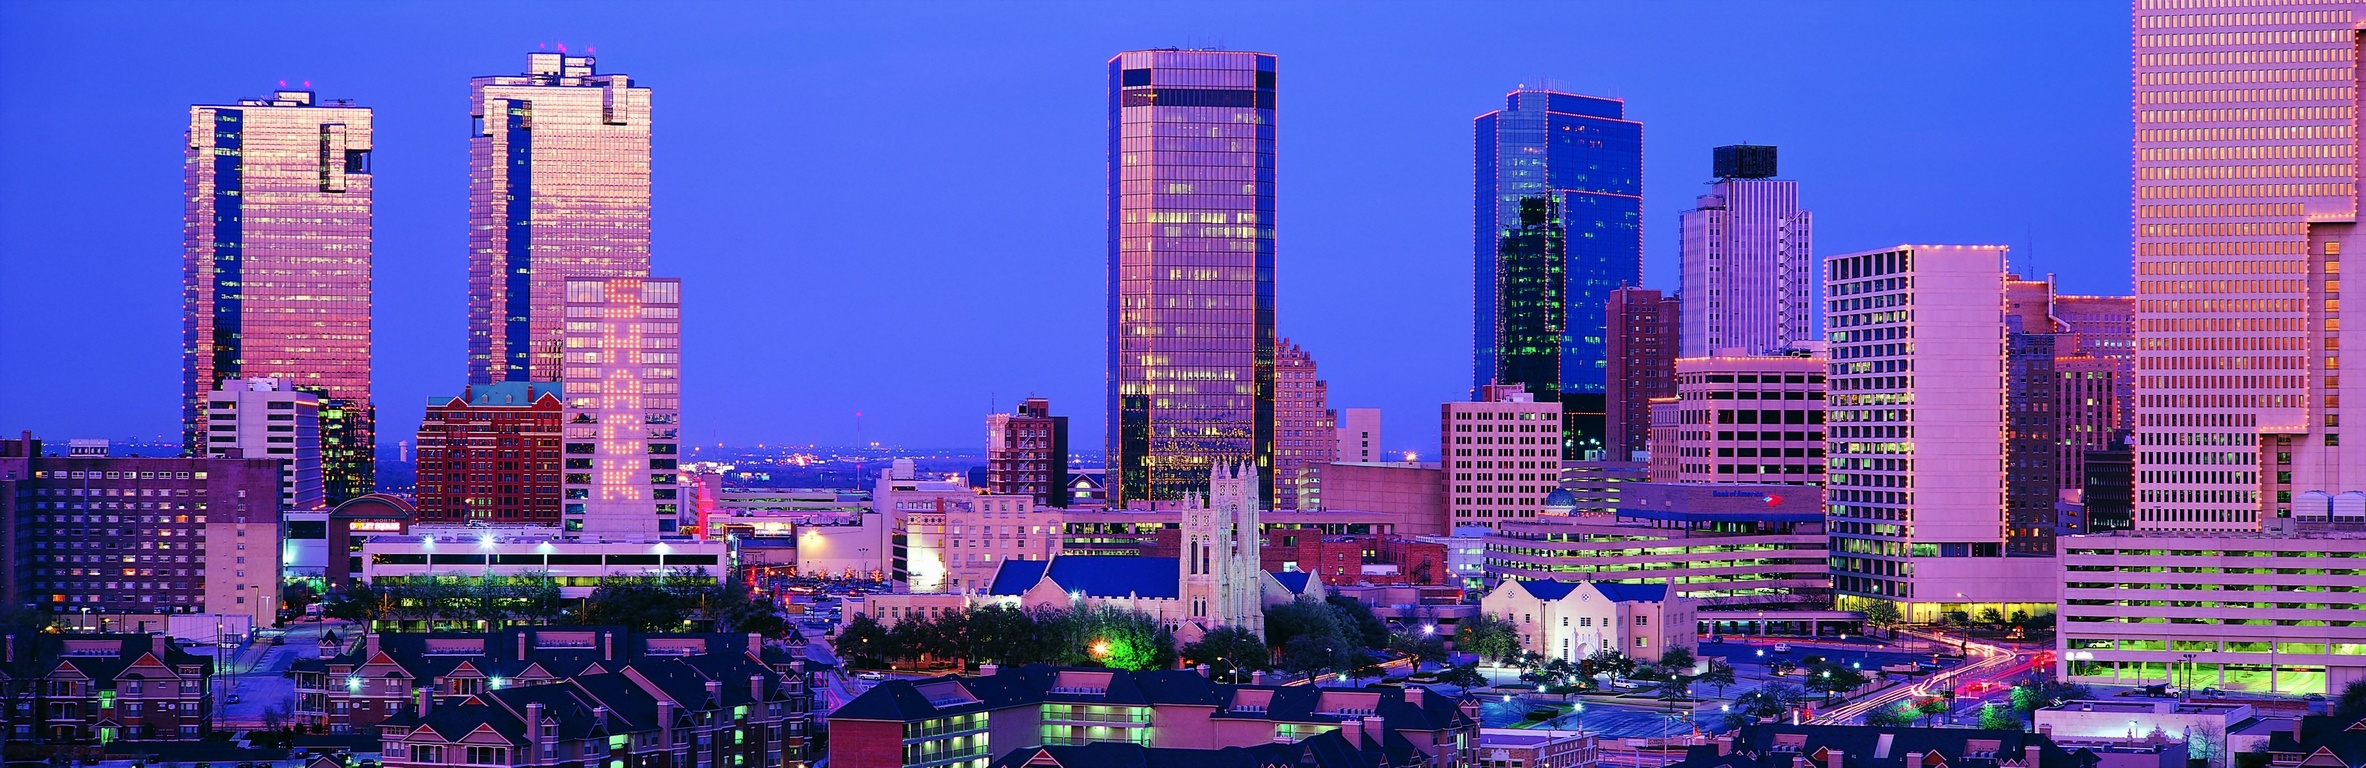 16 Cities of USA With Astonishing Night Views & Skylines | Architecture